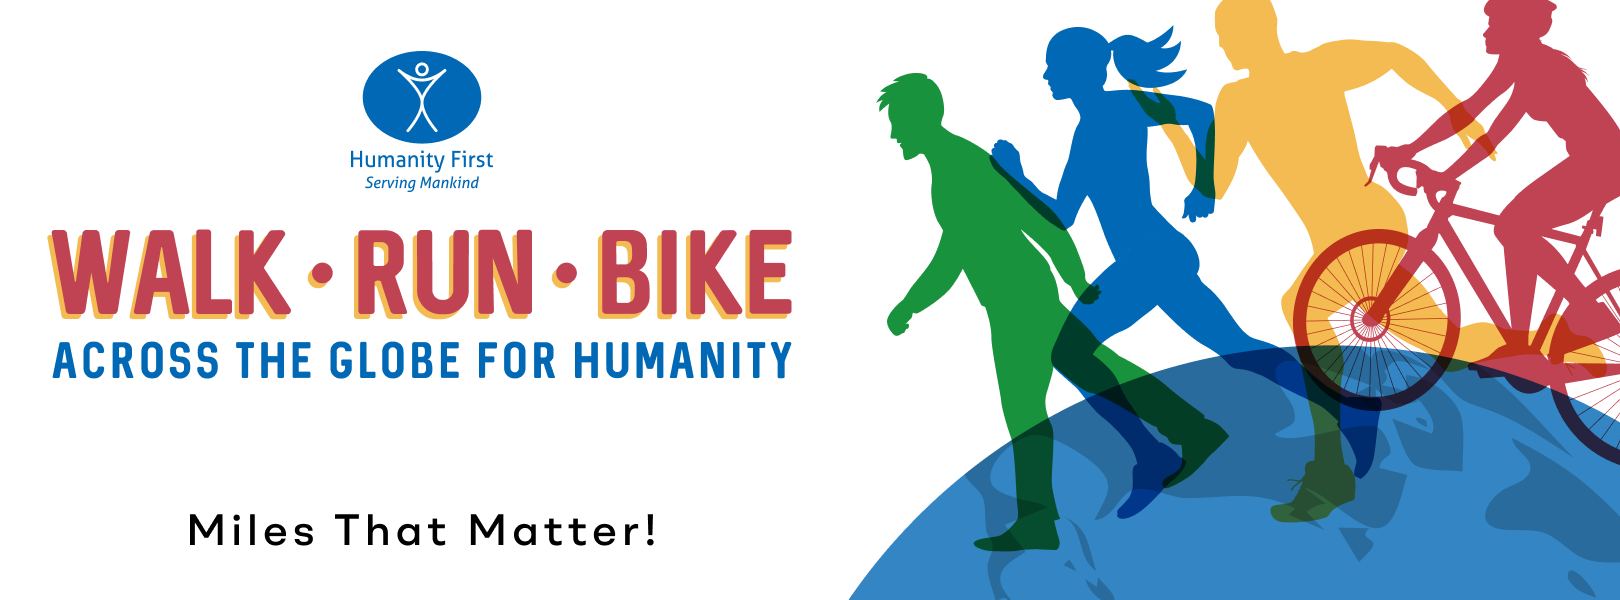 Walk-Run-Bike Across the Globe for Humanity: Miles that Matter